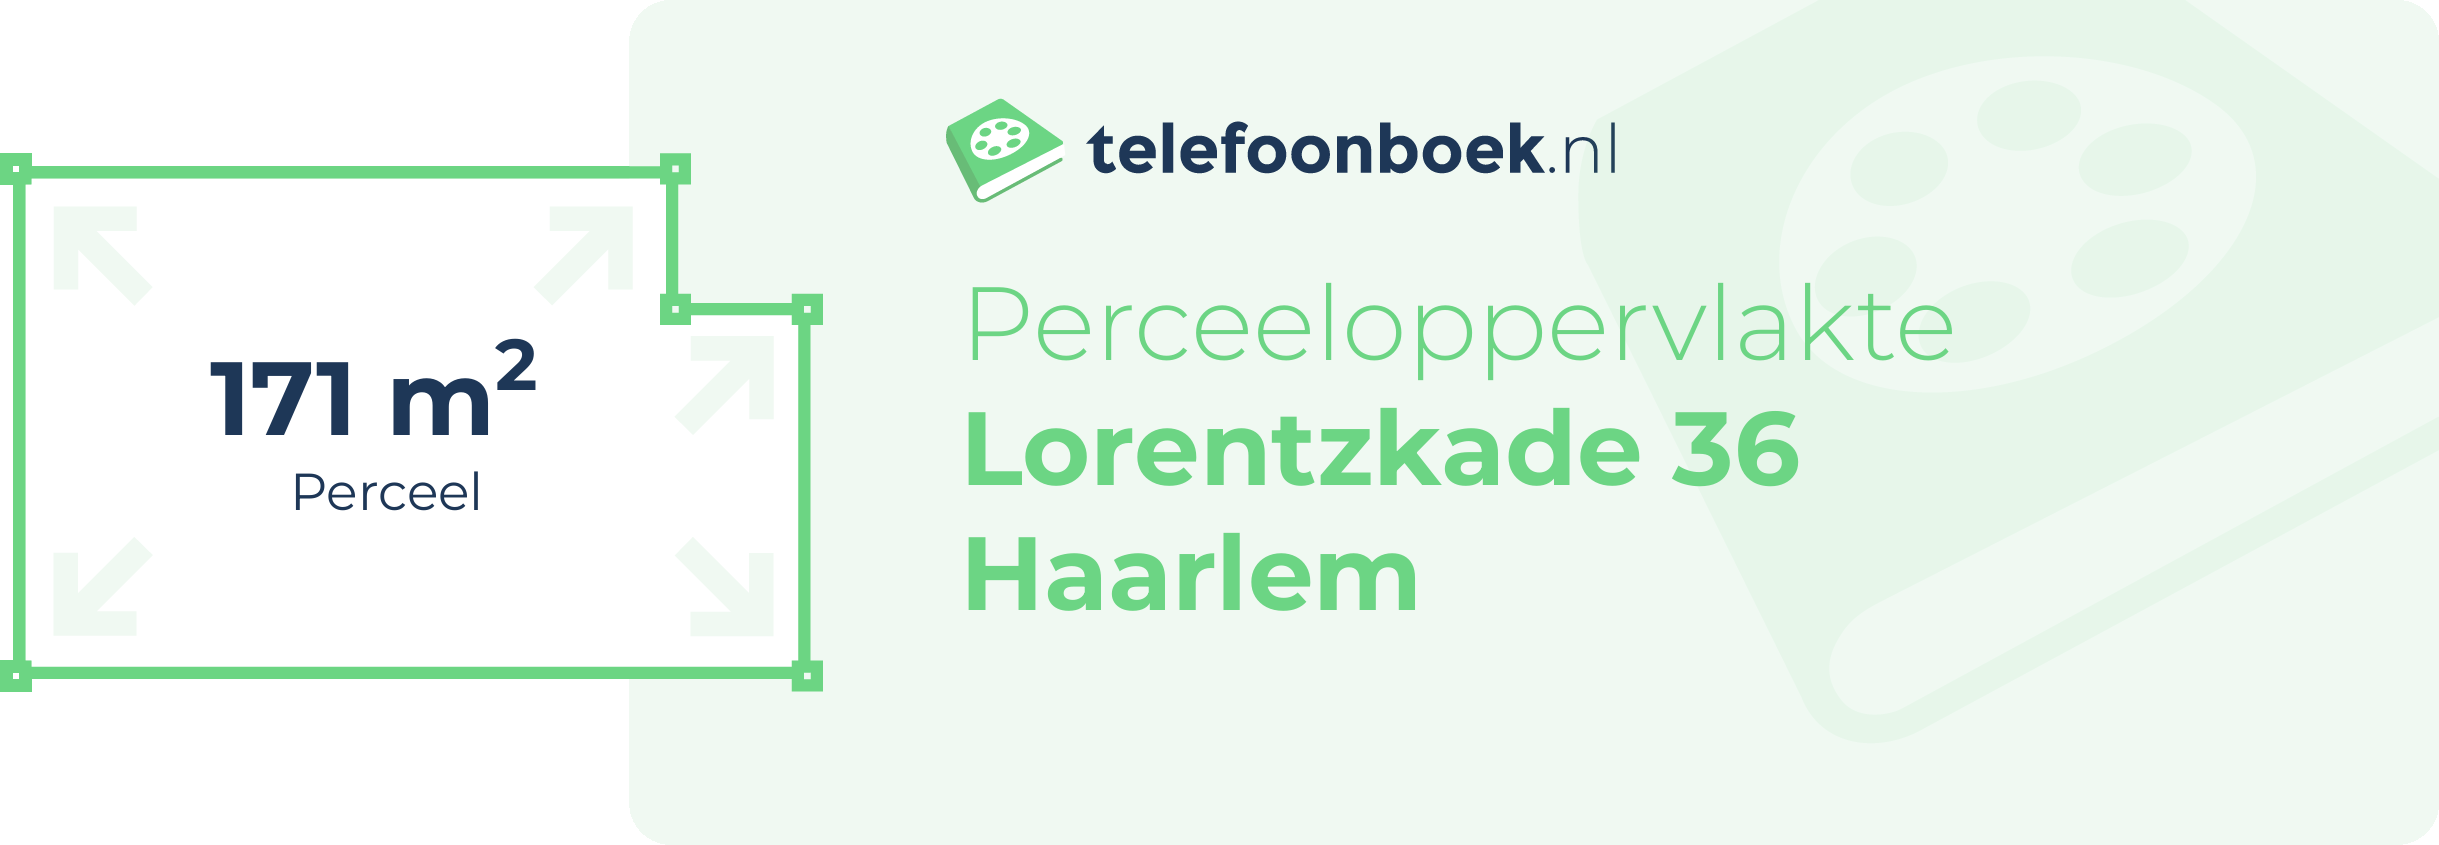 Perceeloppervlakte Lorentzkade 36 Haarlem